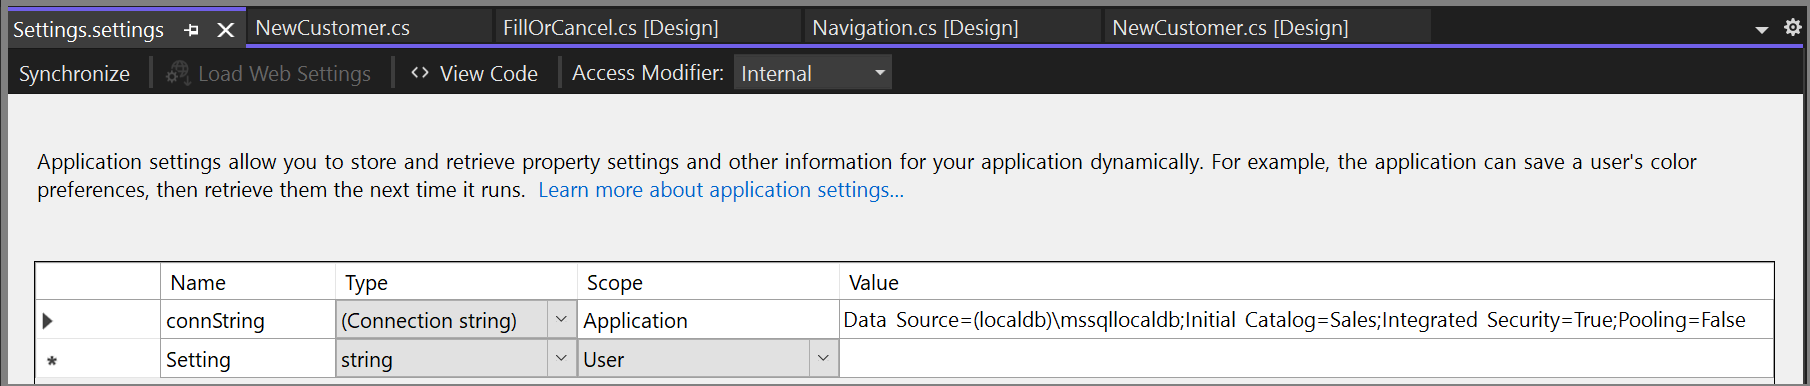 Create a simple data application by using ADO.NET - Visual Studio (Windows)  | Microsoft Learn